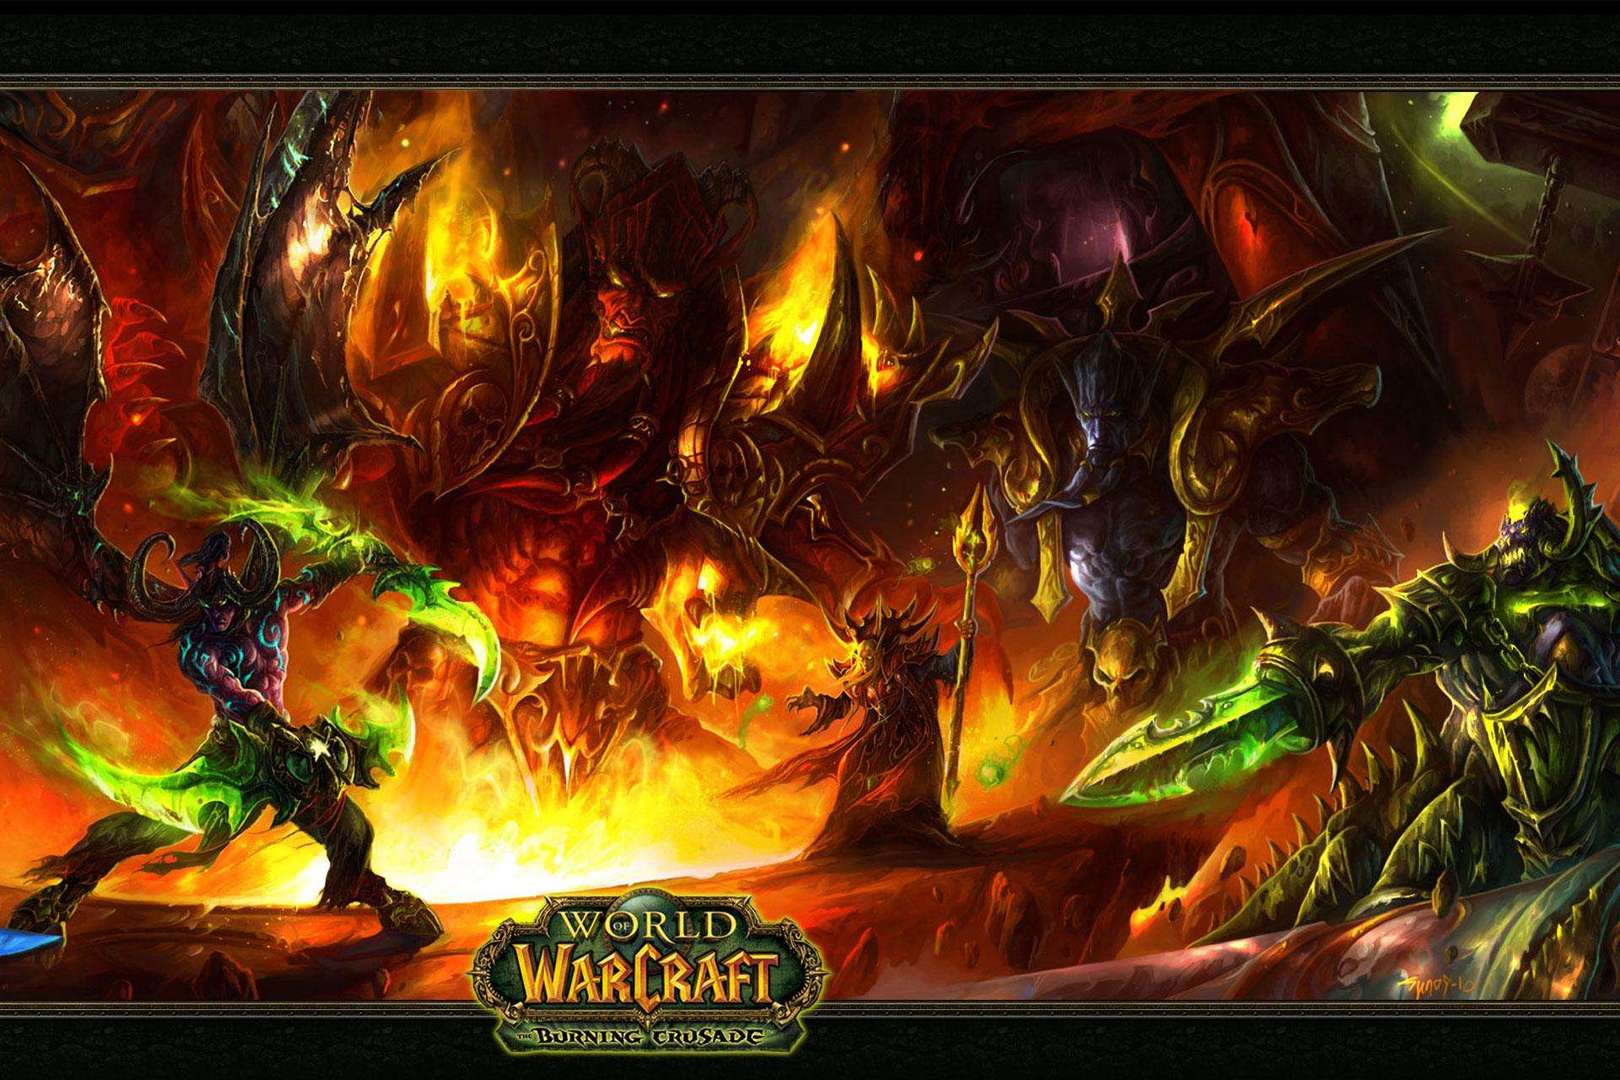 魔兽世界:燃烧的远征 world of warcraft: the burning crusade 的